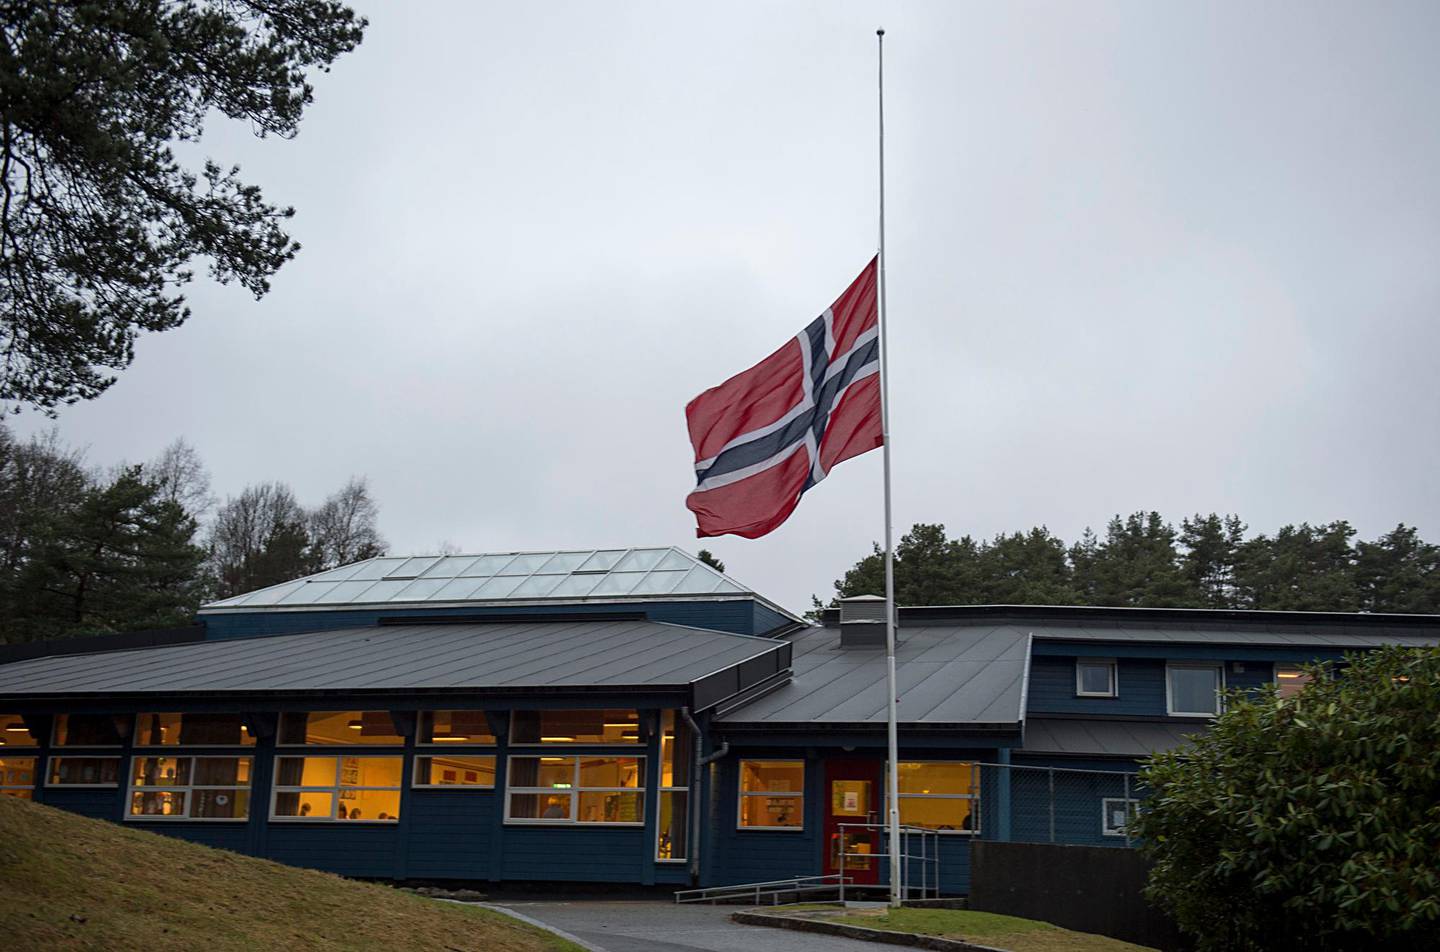 Bergen 20200106. 
Flagget på halv stang ved Aurdalslia barneskole der den 9 år gamle jenta som omkom i brannen i Ytrebygda gikk.
Foto: Marit Hommedal / NTB scanpix